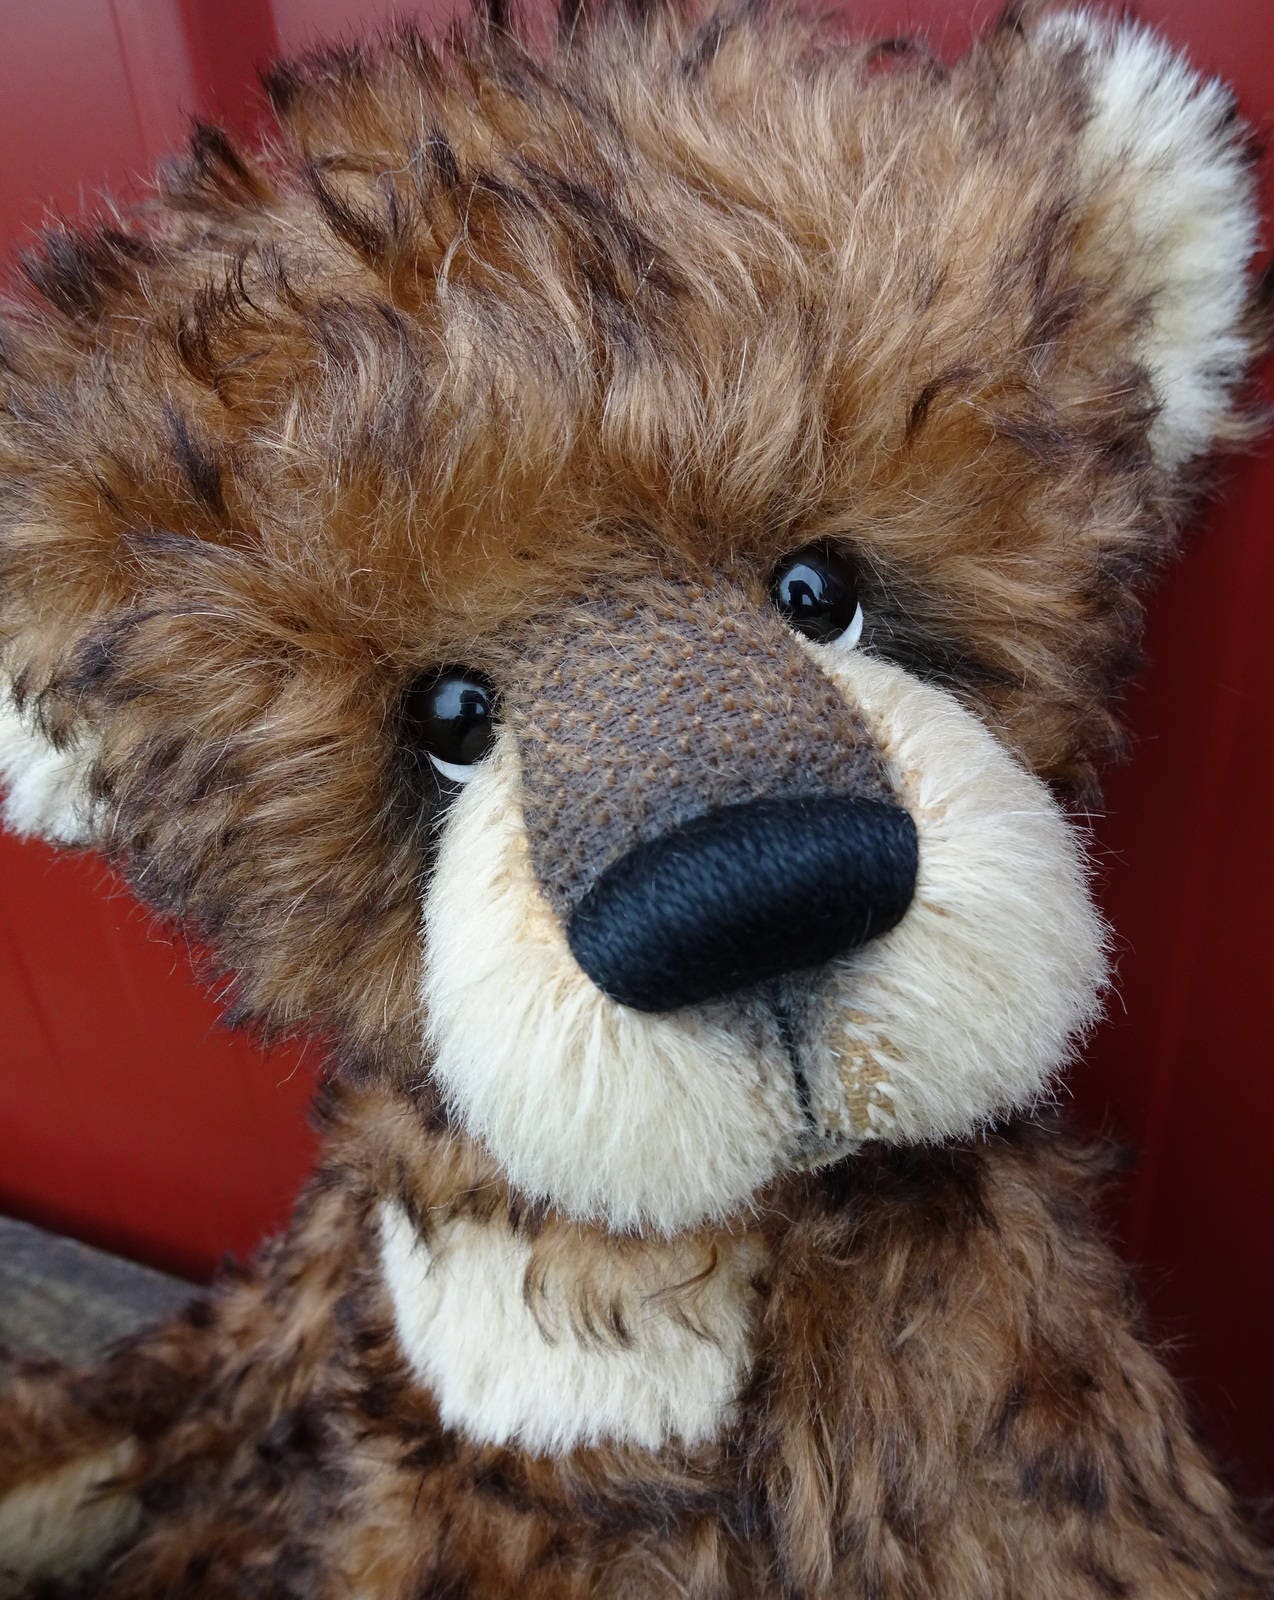 Adorable Teddy Bear DIY Pattern digital File and Online Tutorial